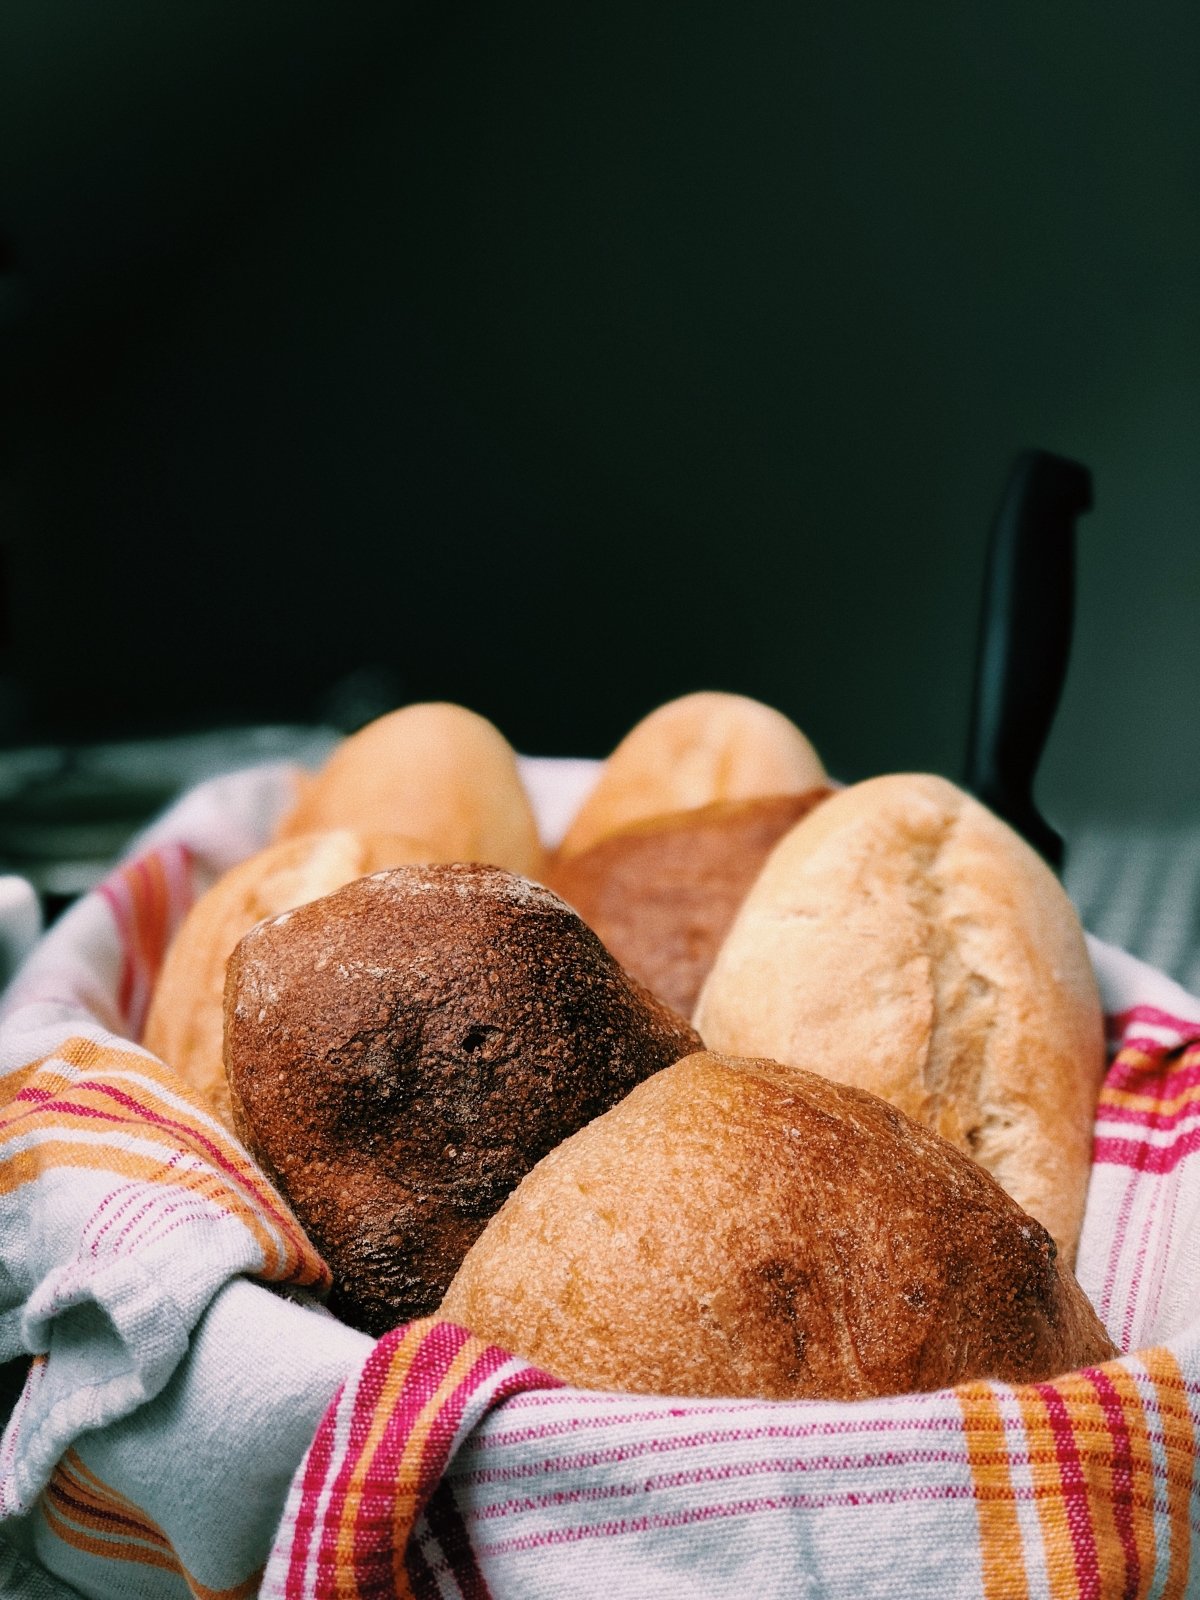 Distintos tipos de panes